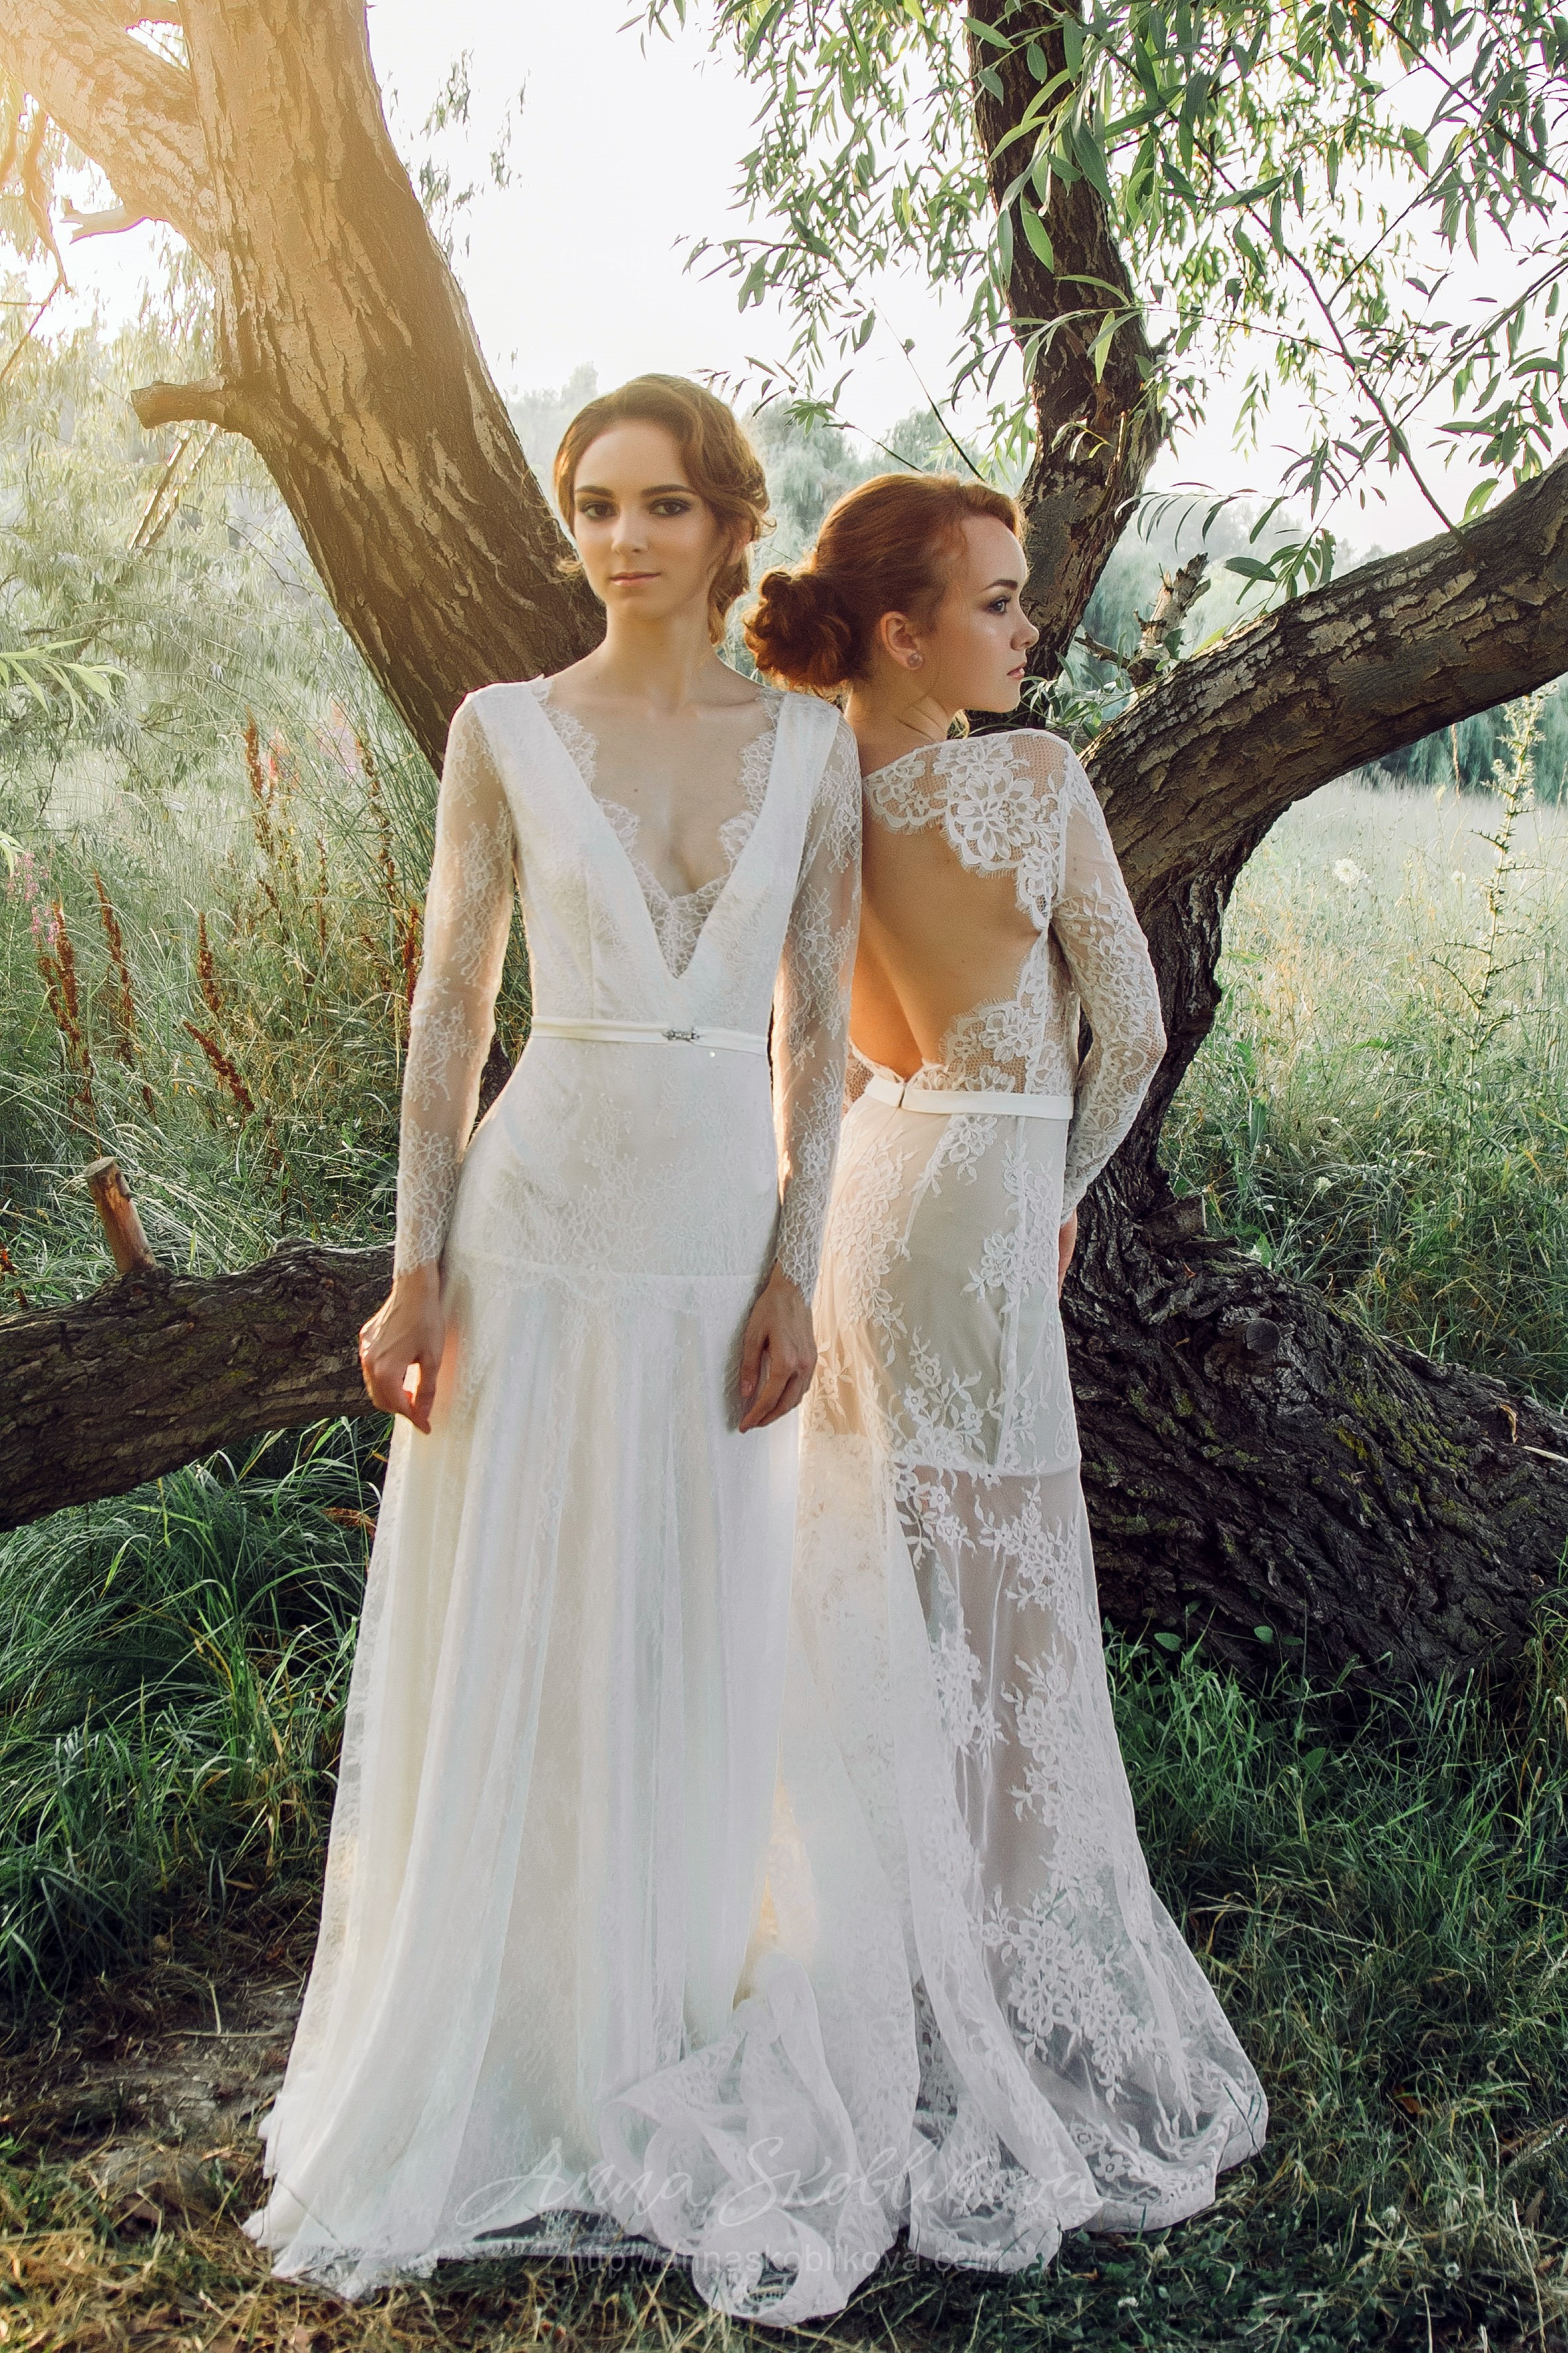 Buy Tsbridal Bohemia Mermaid Dresses Lace Bridal Dresses Beach Garden Ivory  Bridal Gowns with PocketXC281-White4 at Amazon.in